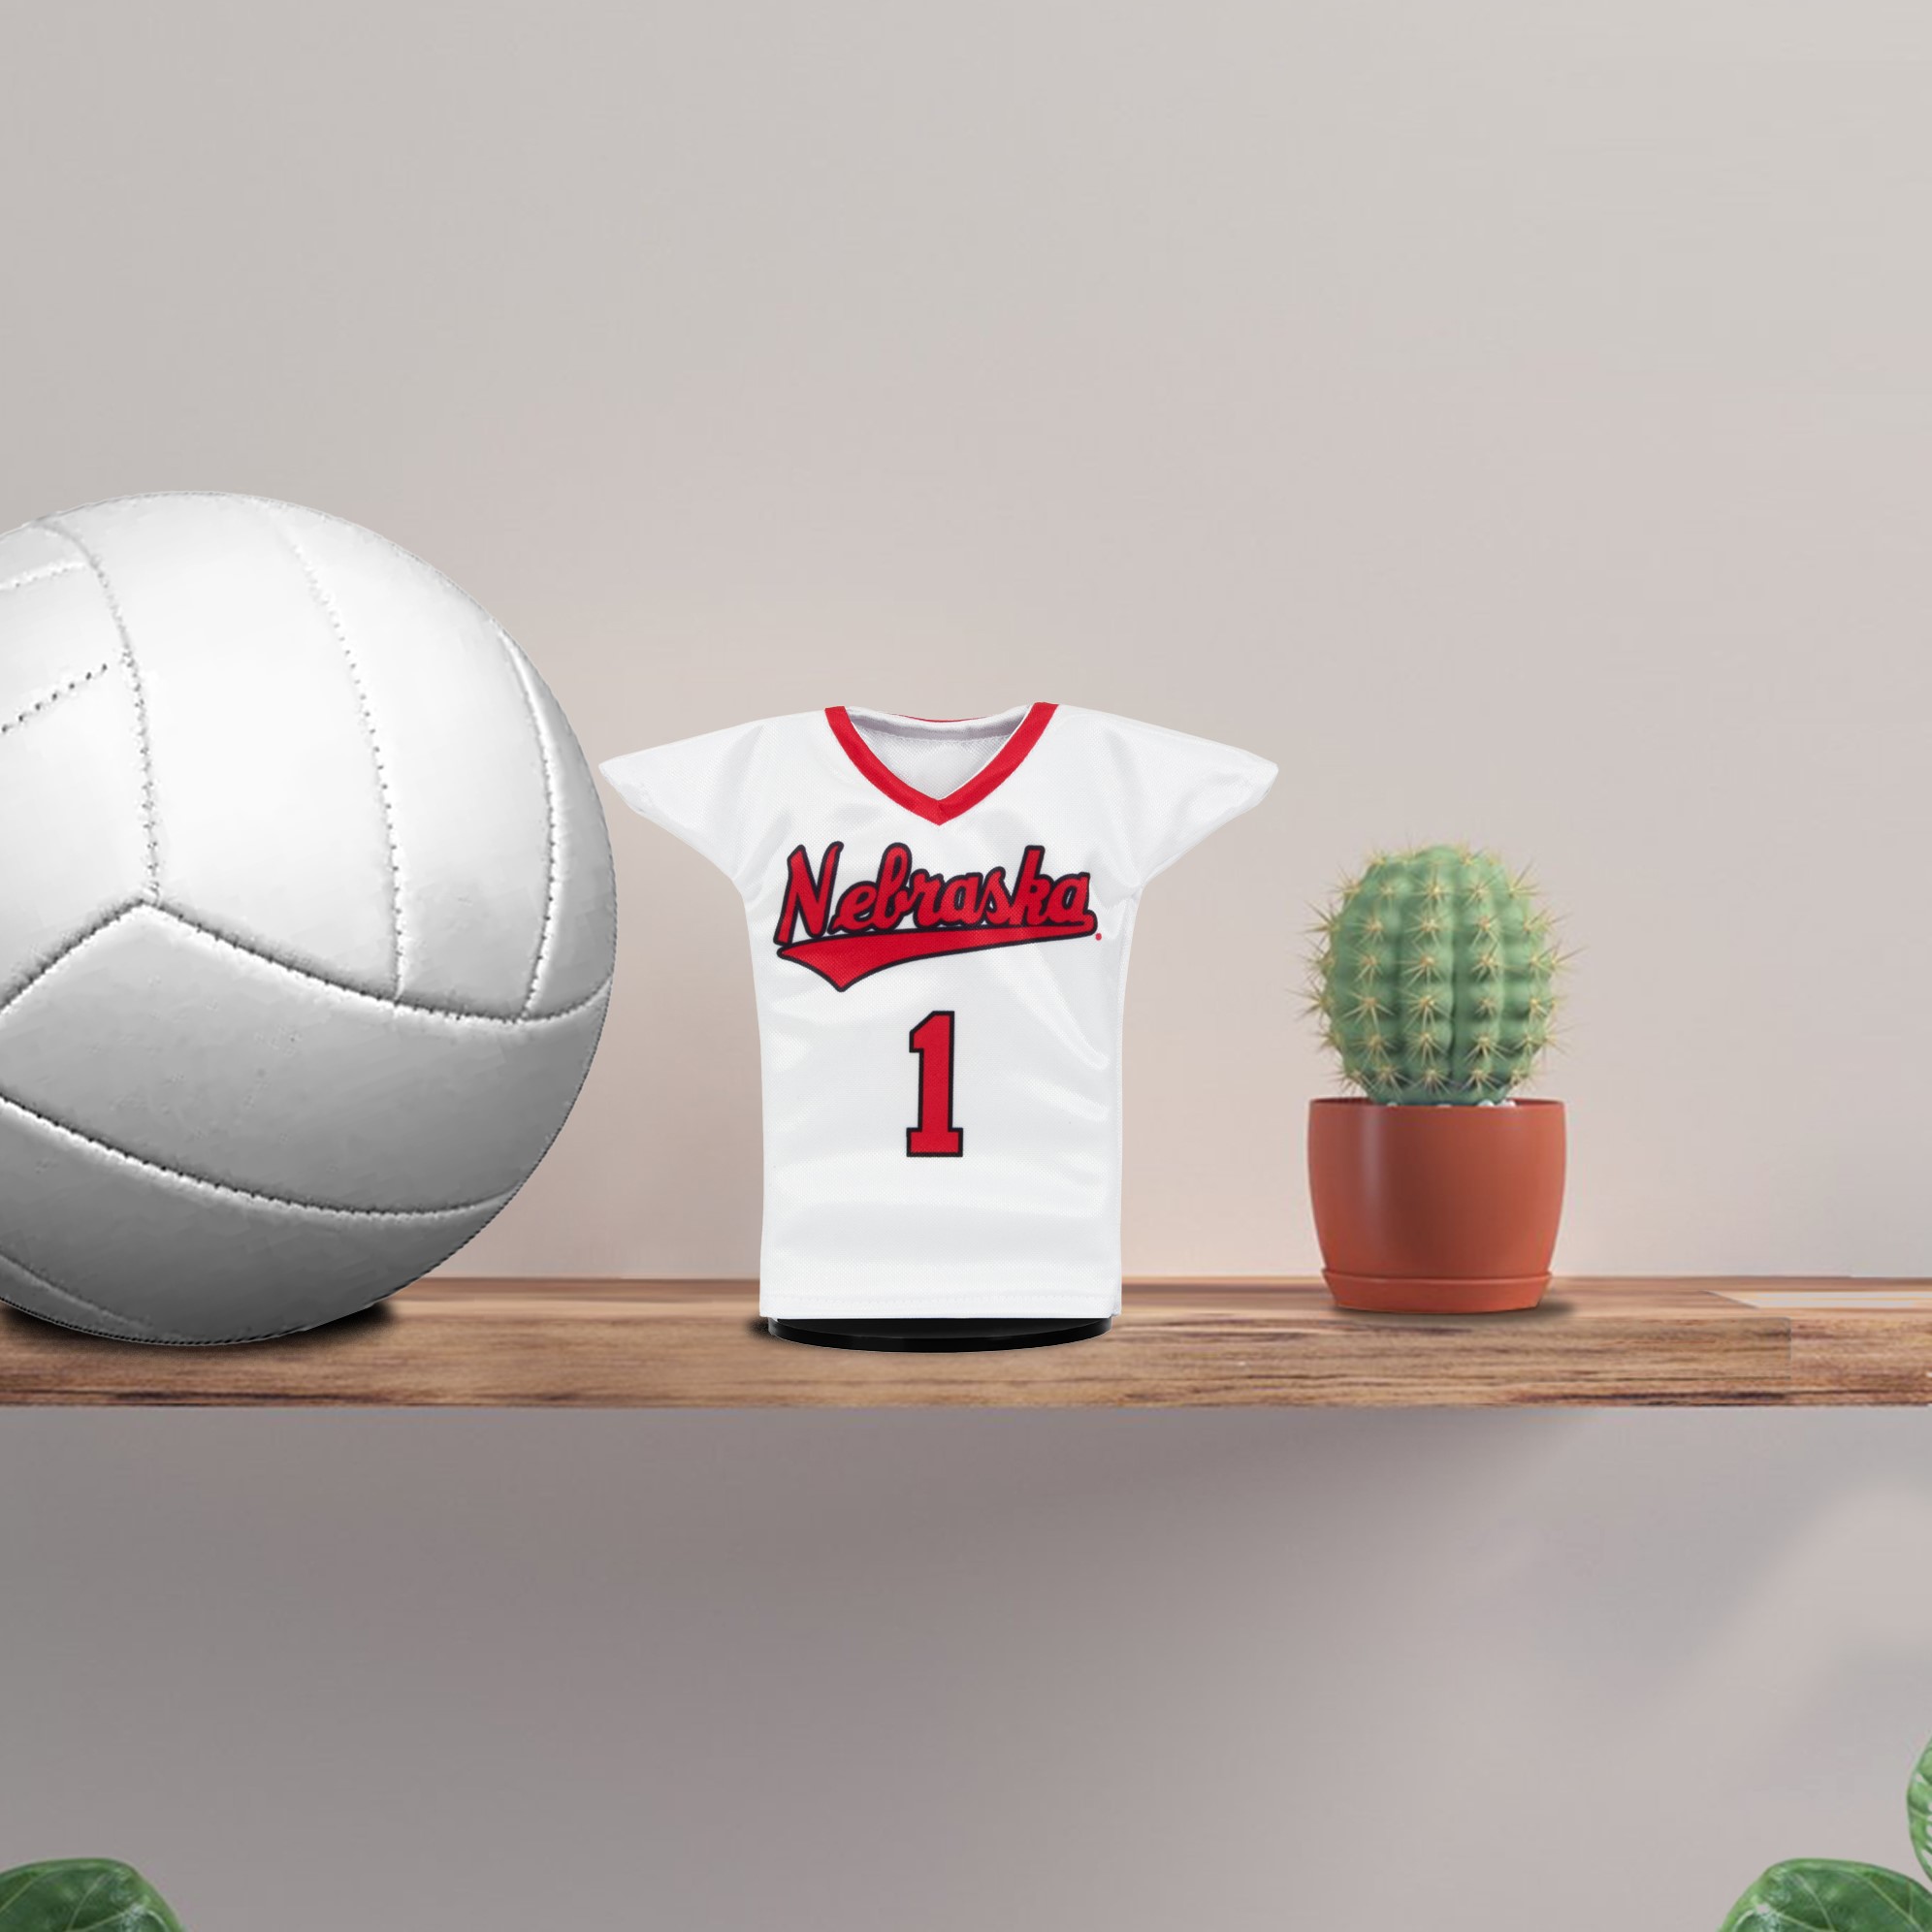 Nebraska Huskers Volleyball #1 Miniature Sports Jersey Desk